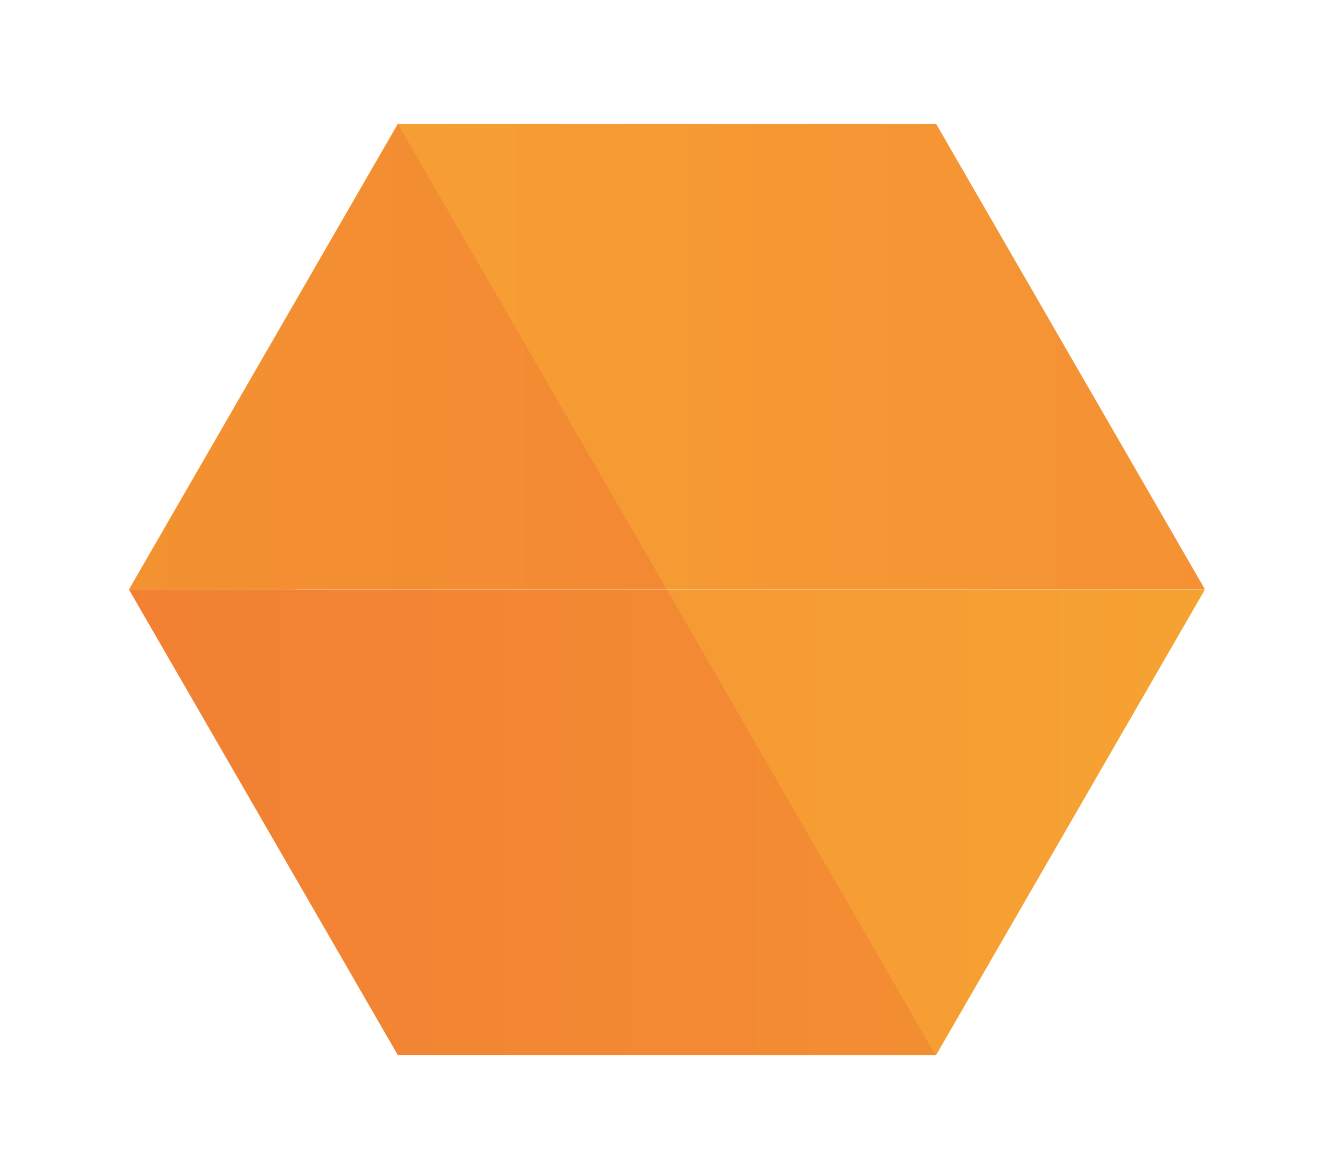 Home solektra international and. Hexagon clipart orange